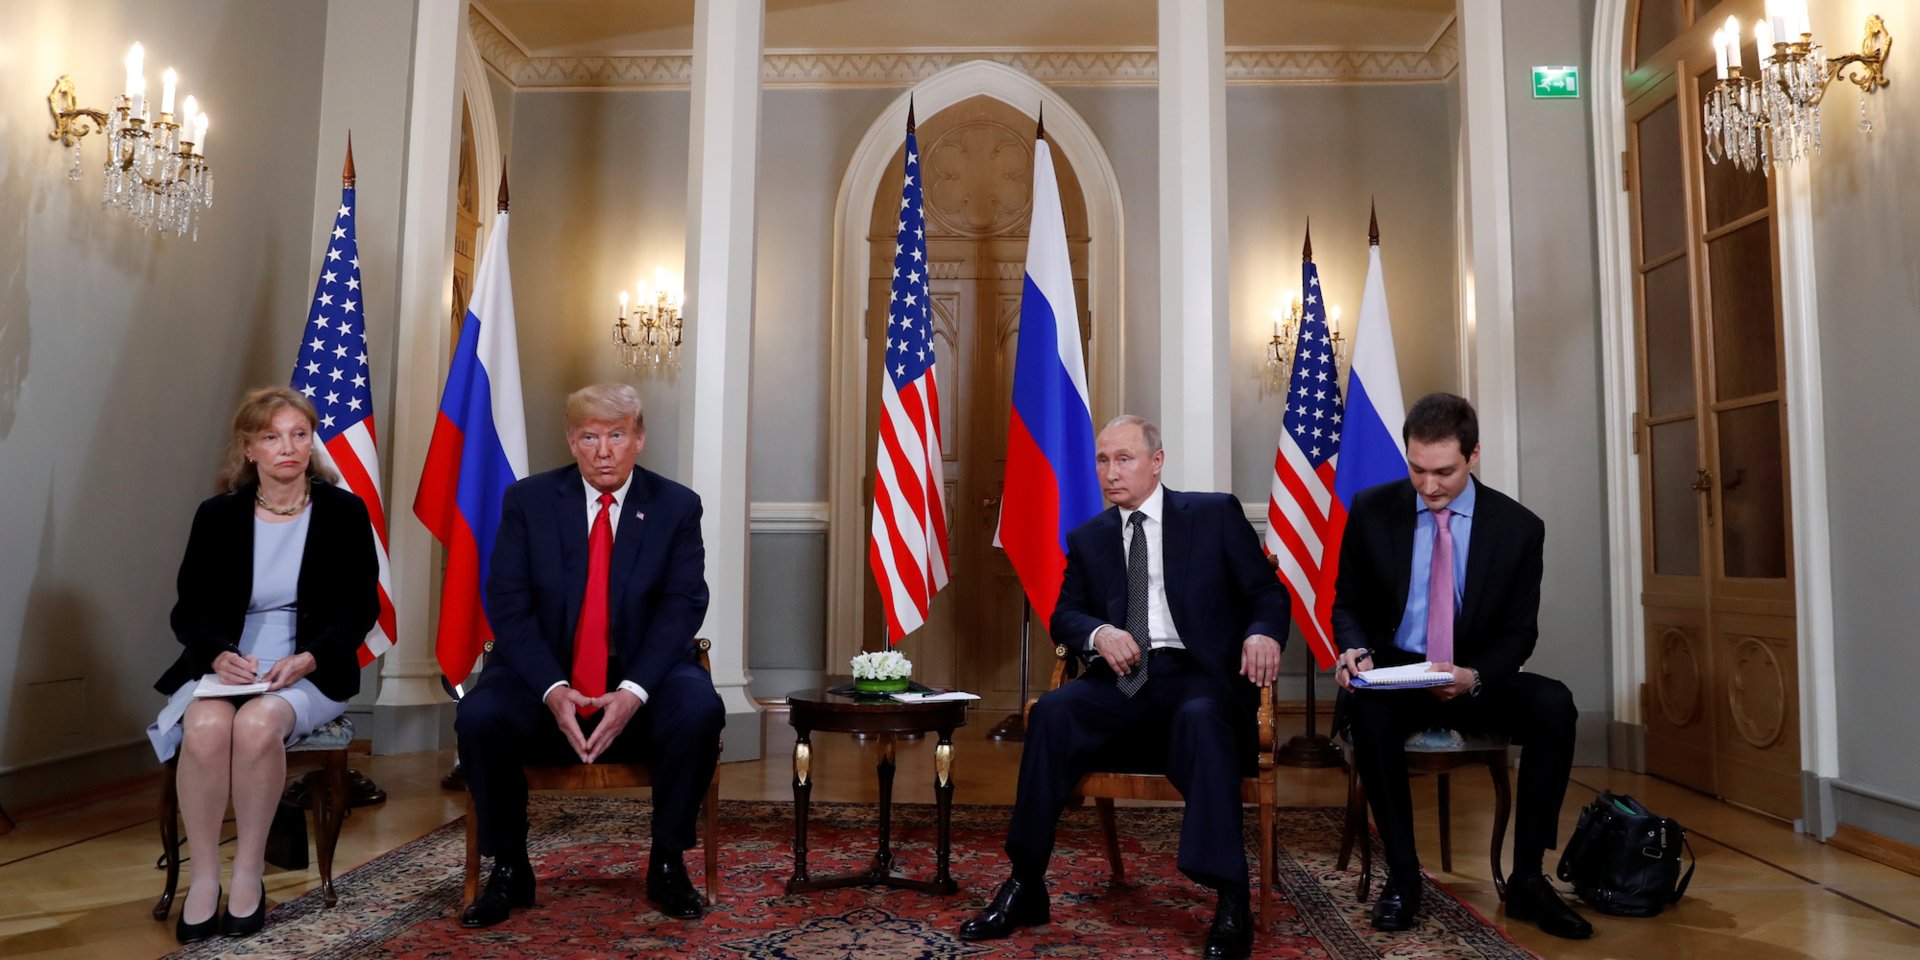 Predsednika Putin in Trump s prevajalkama Vir:Pixsell